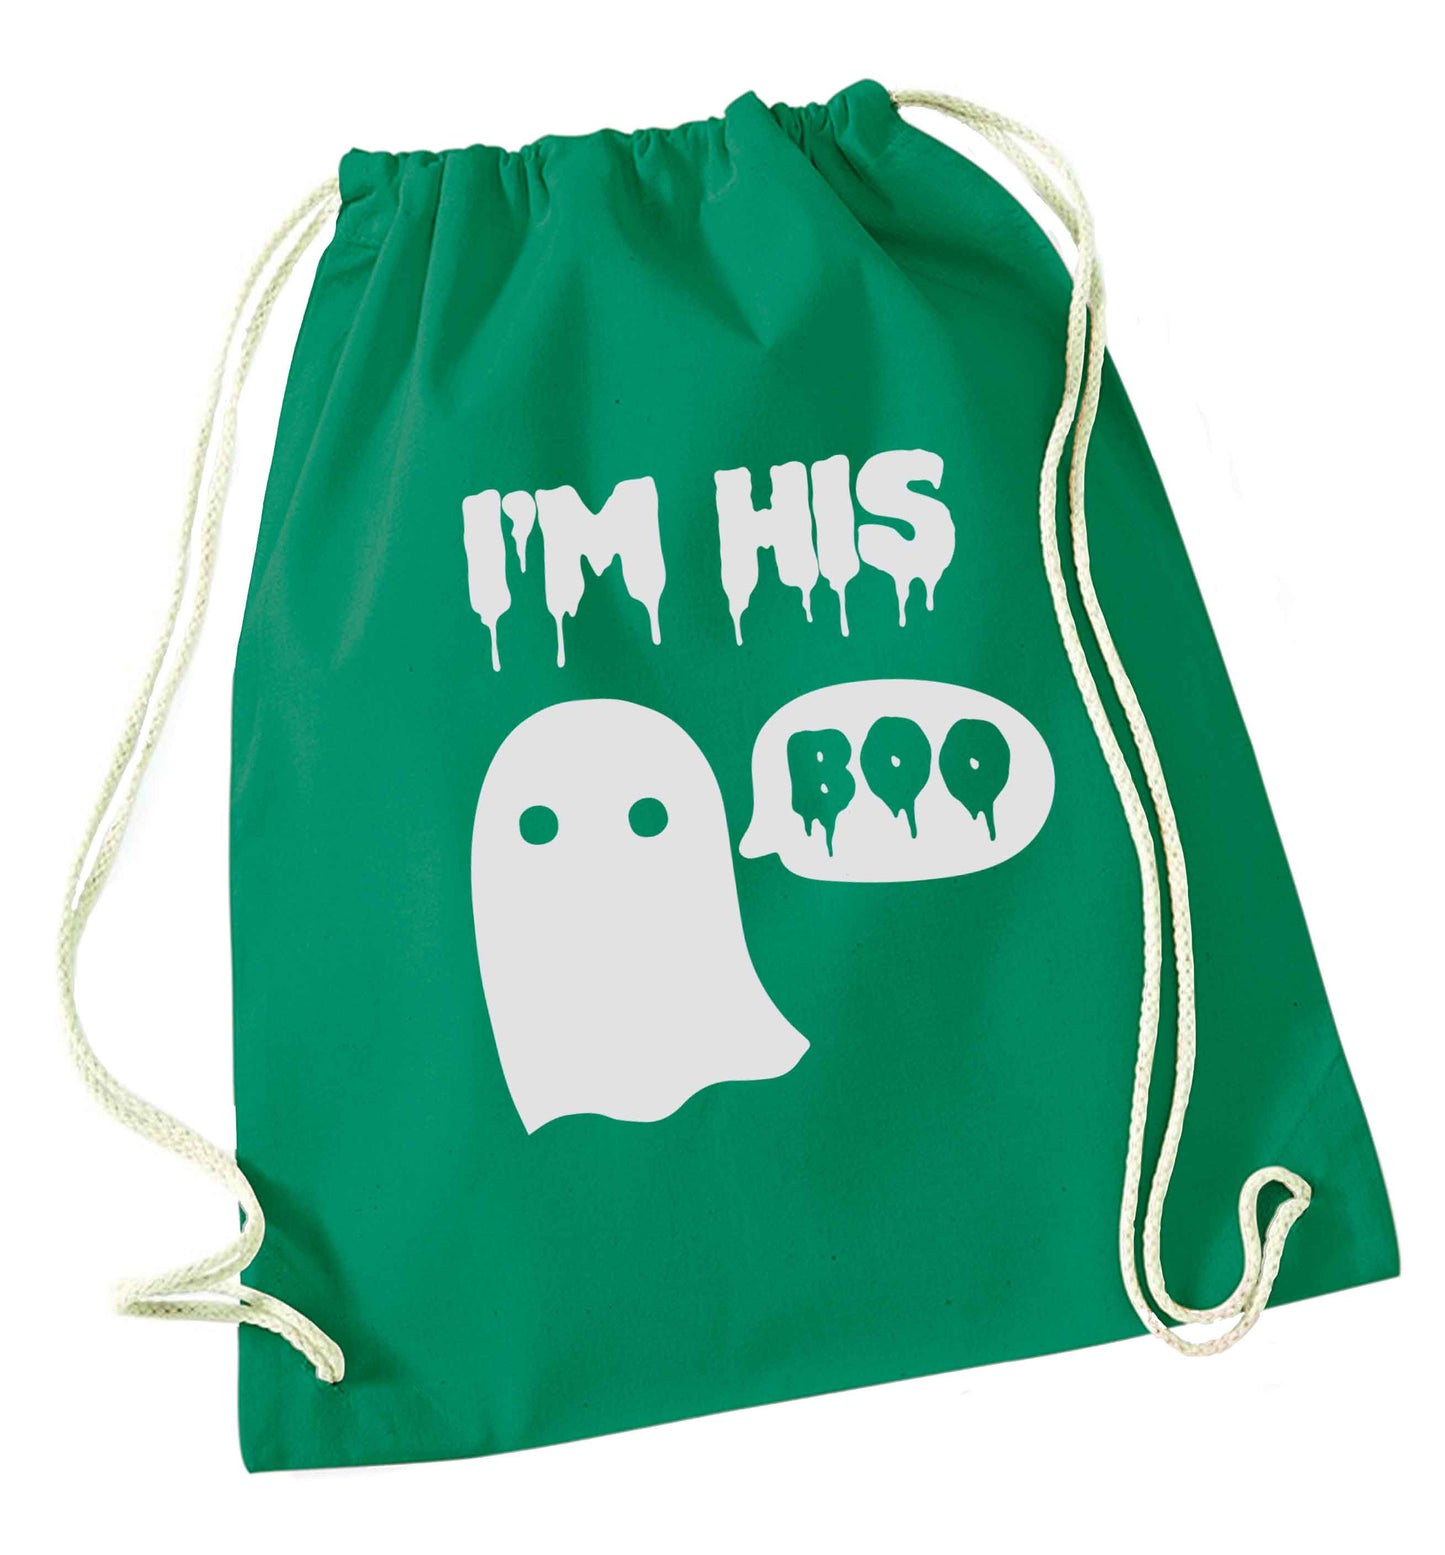 I'm his boo green drawstring bag